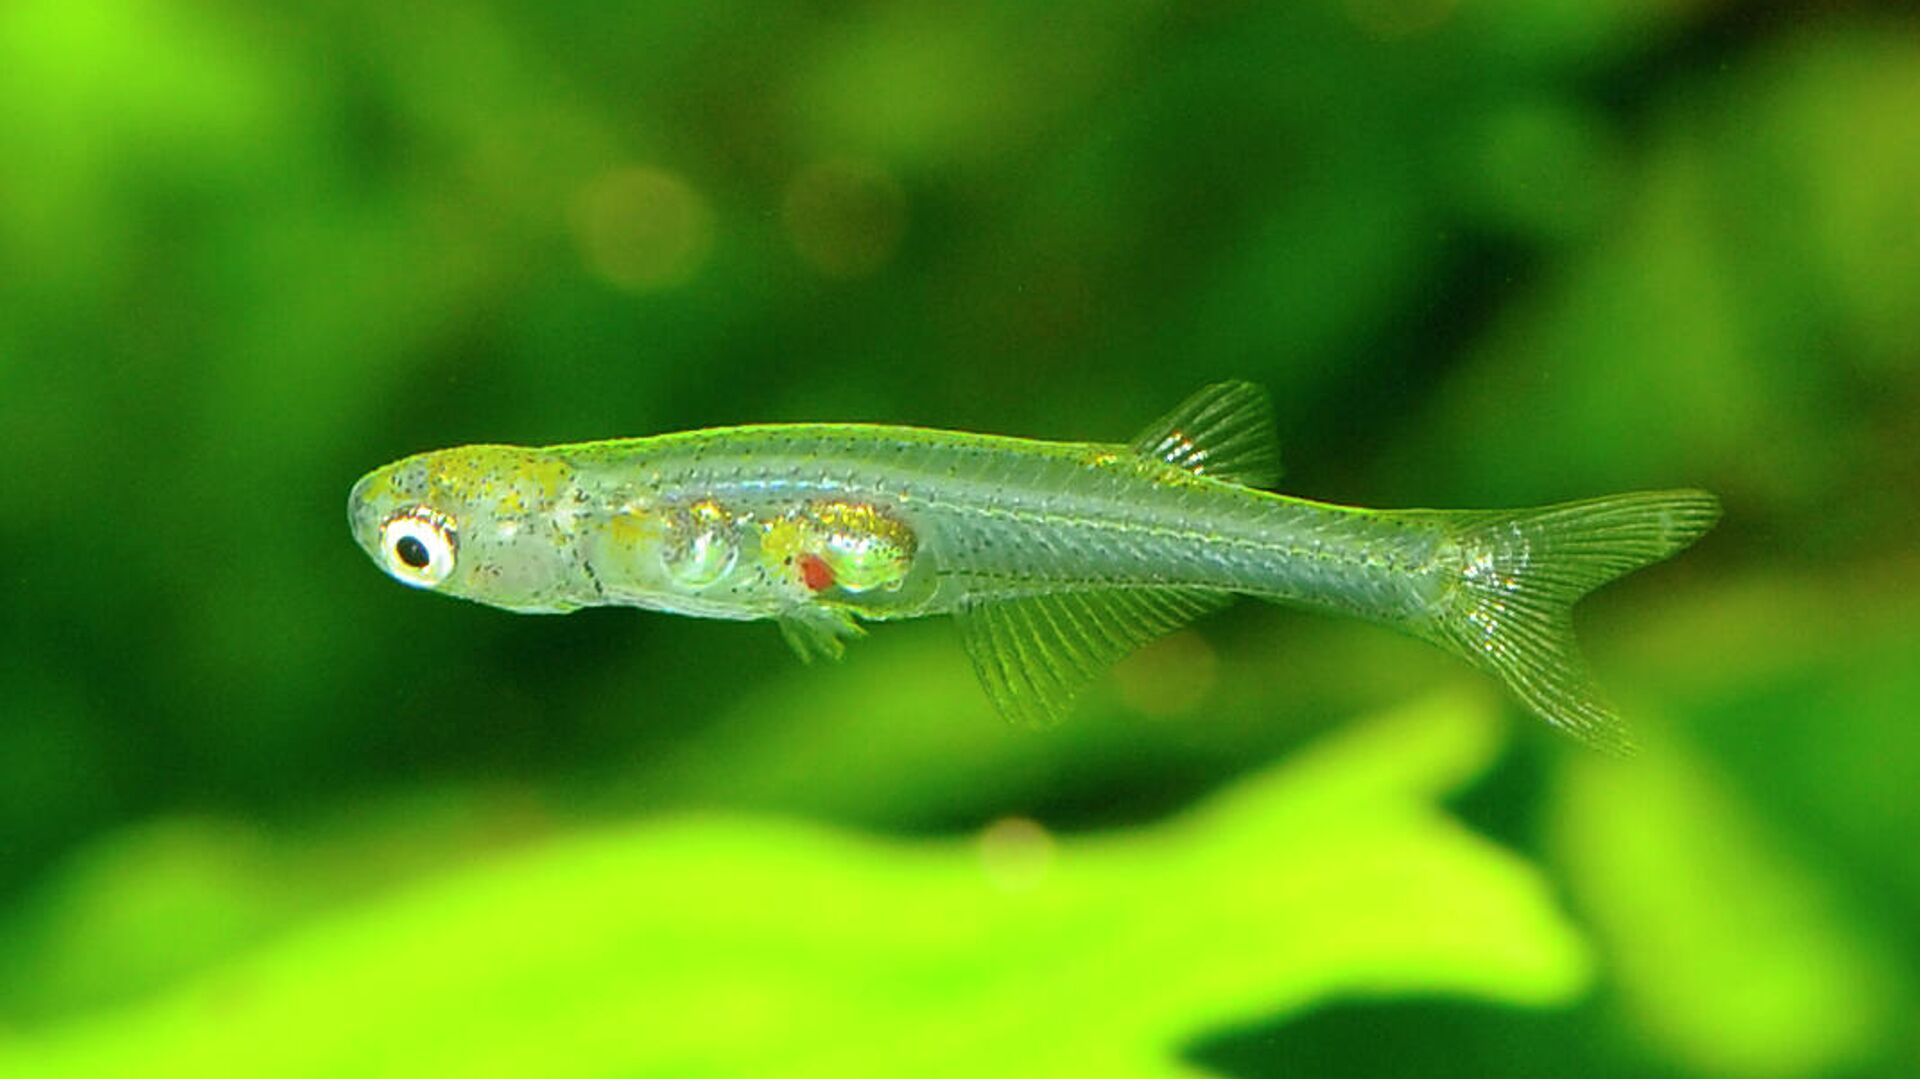 Биологи: рыбки вида Danionella cerebrum издают звук громче реактивного двигателя